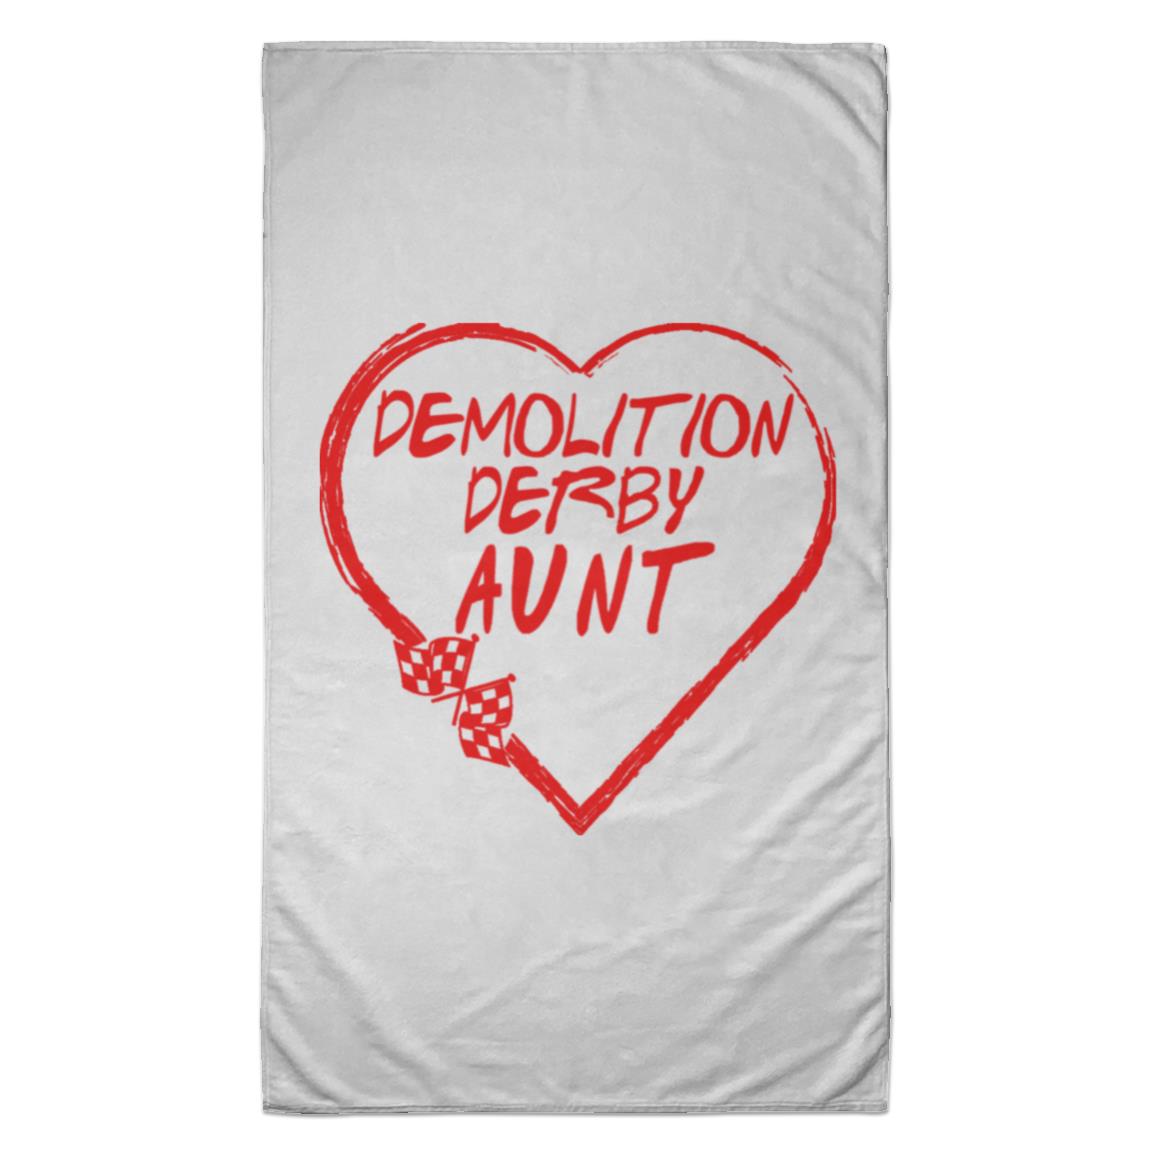 Demolition Derby Aunt Heart Towel - 35x60